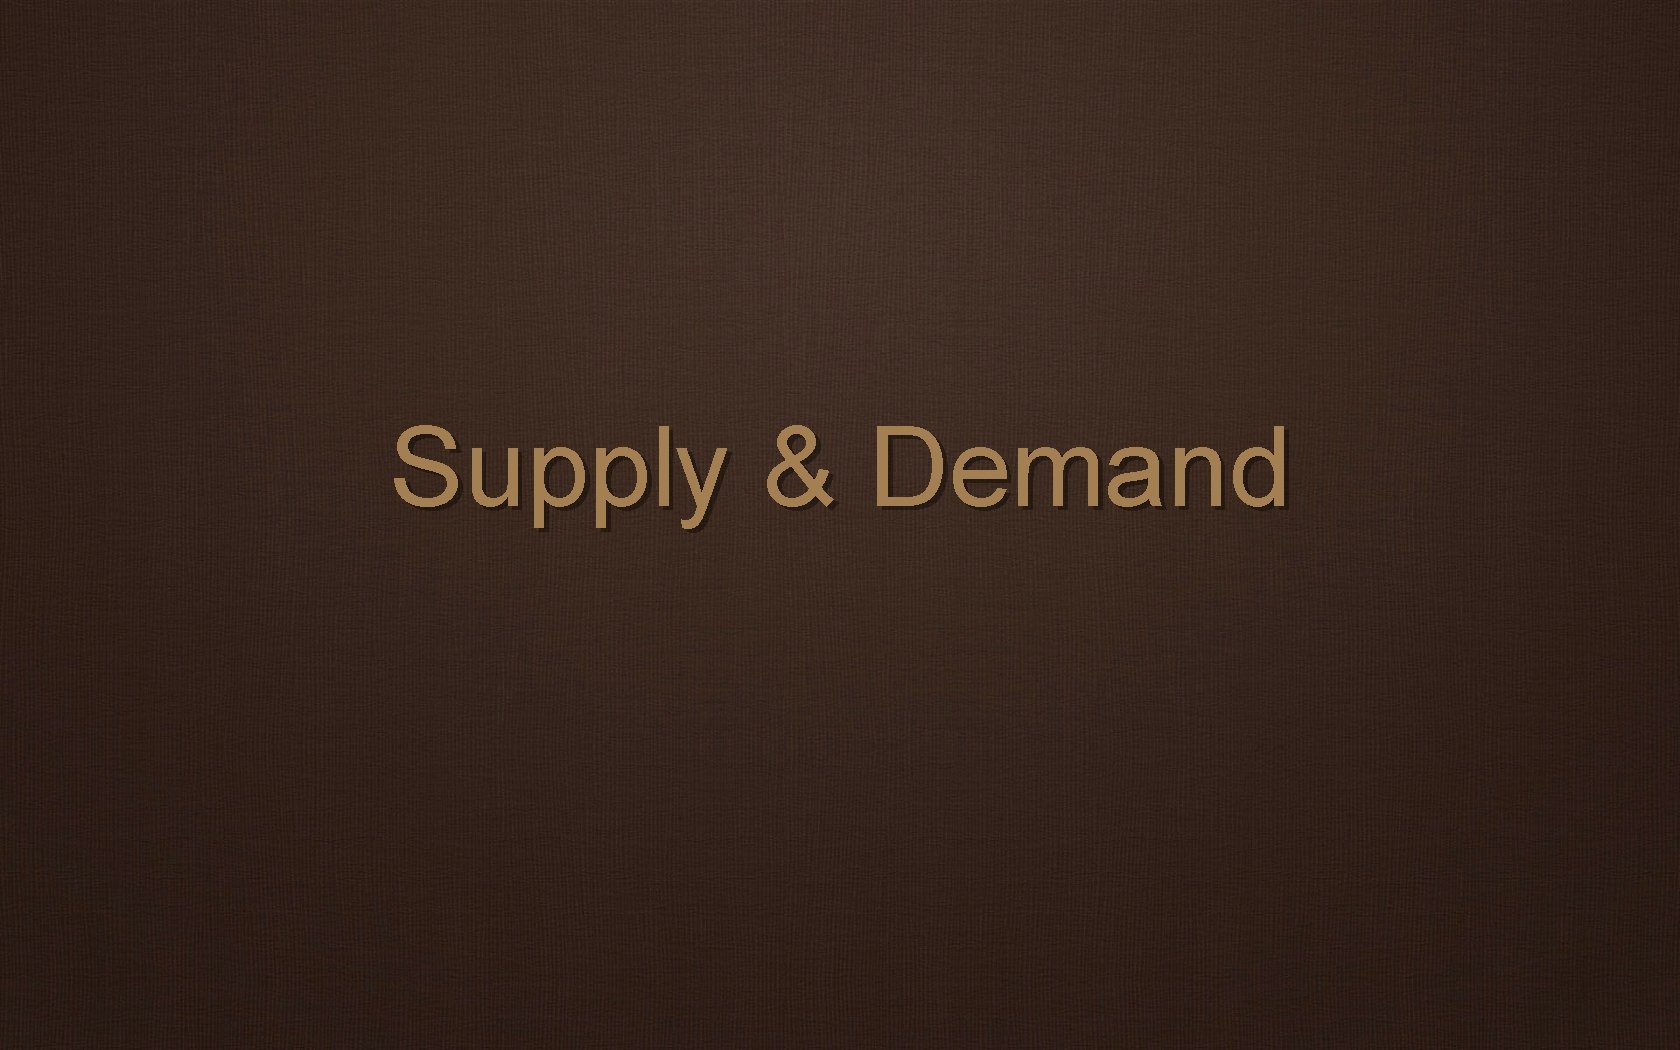 Supply & Demand 